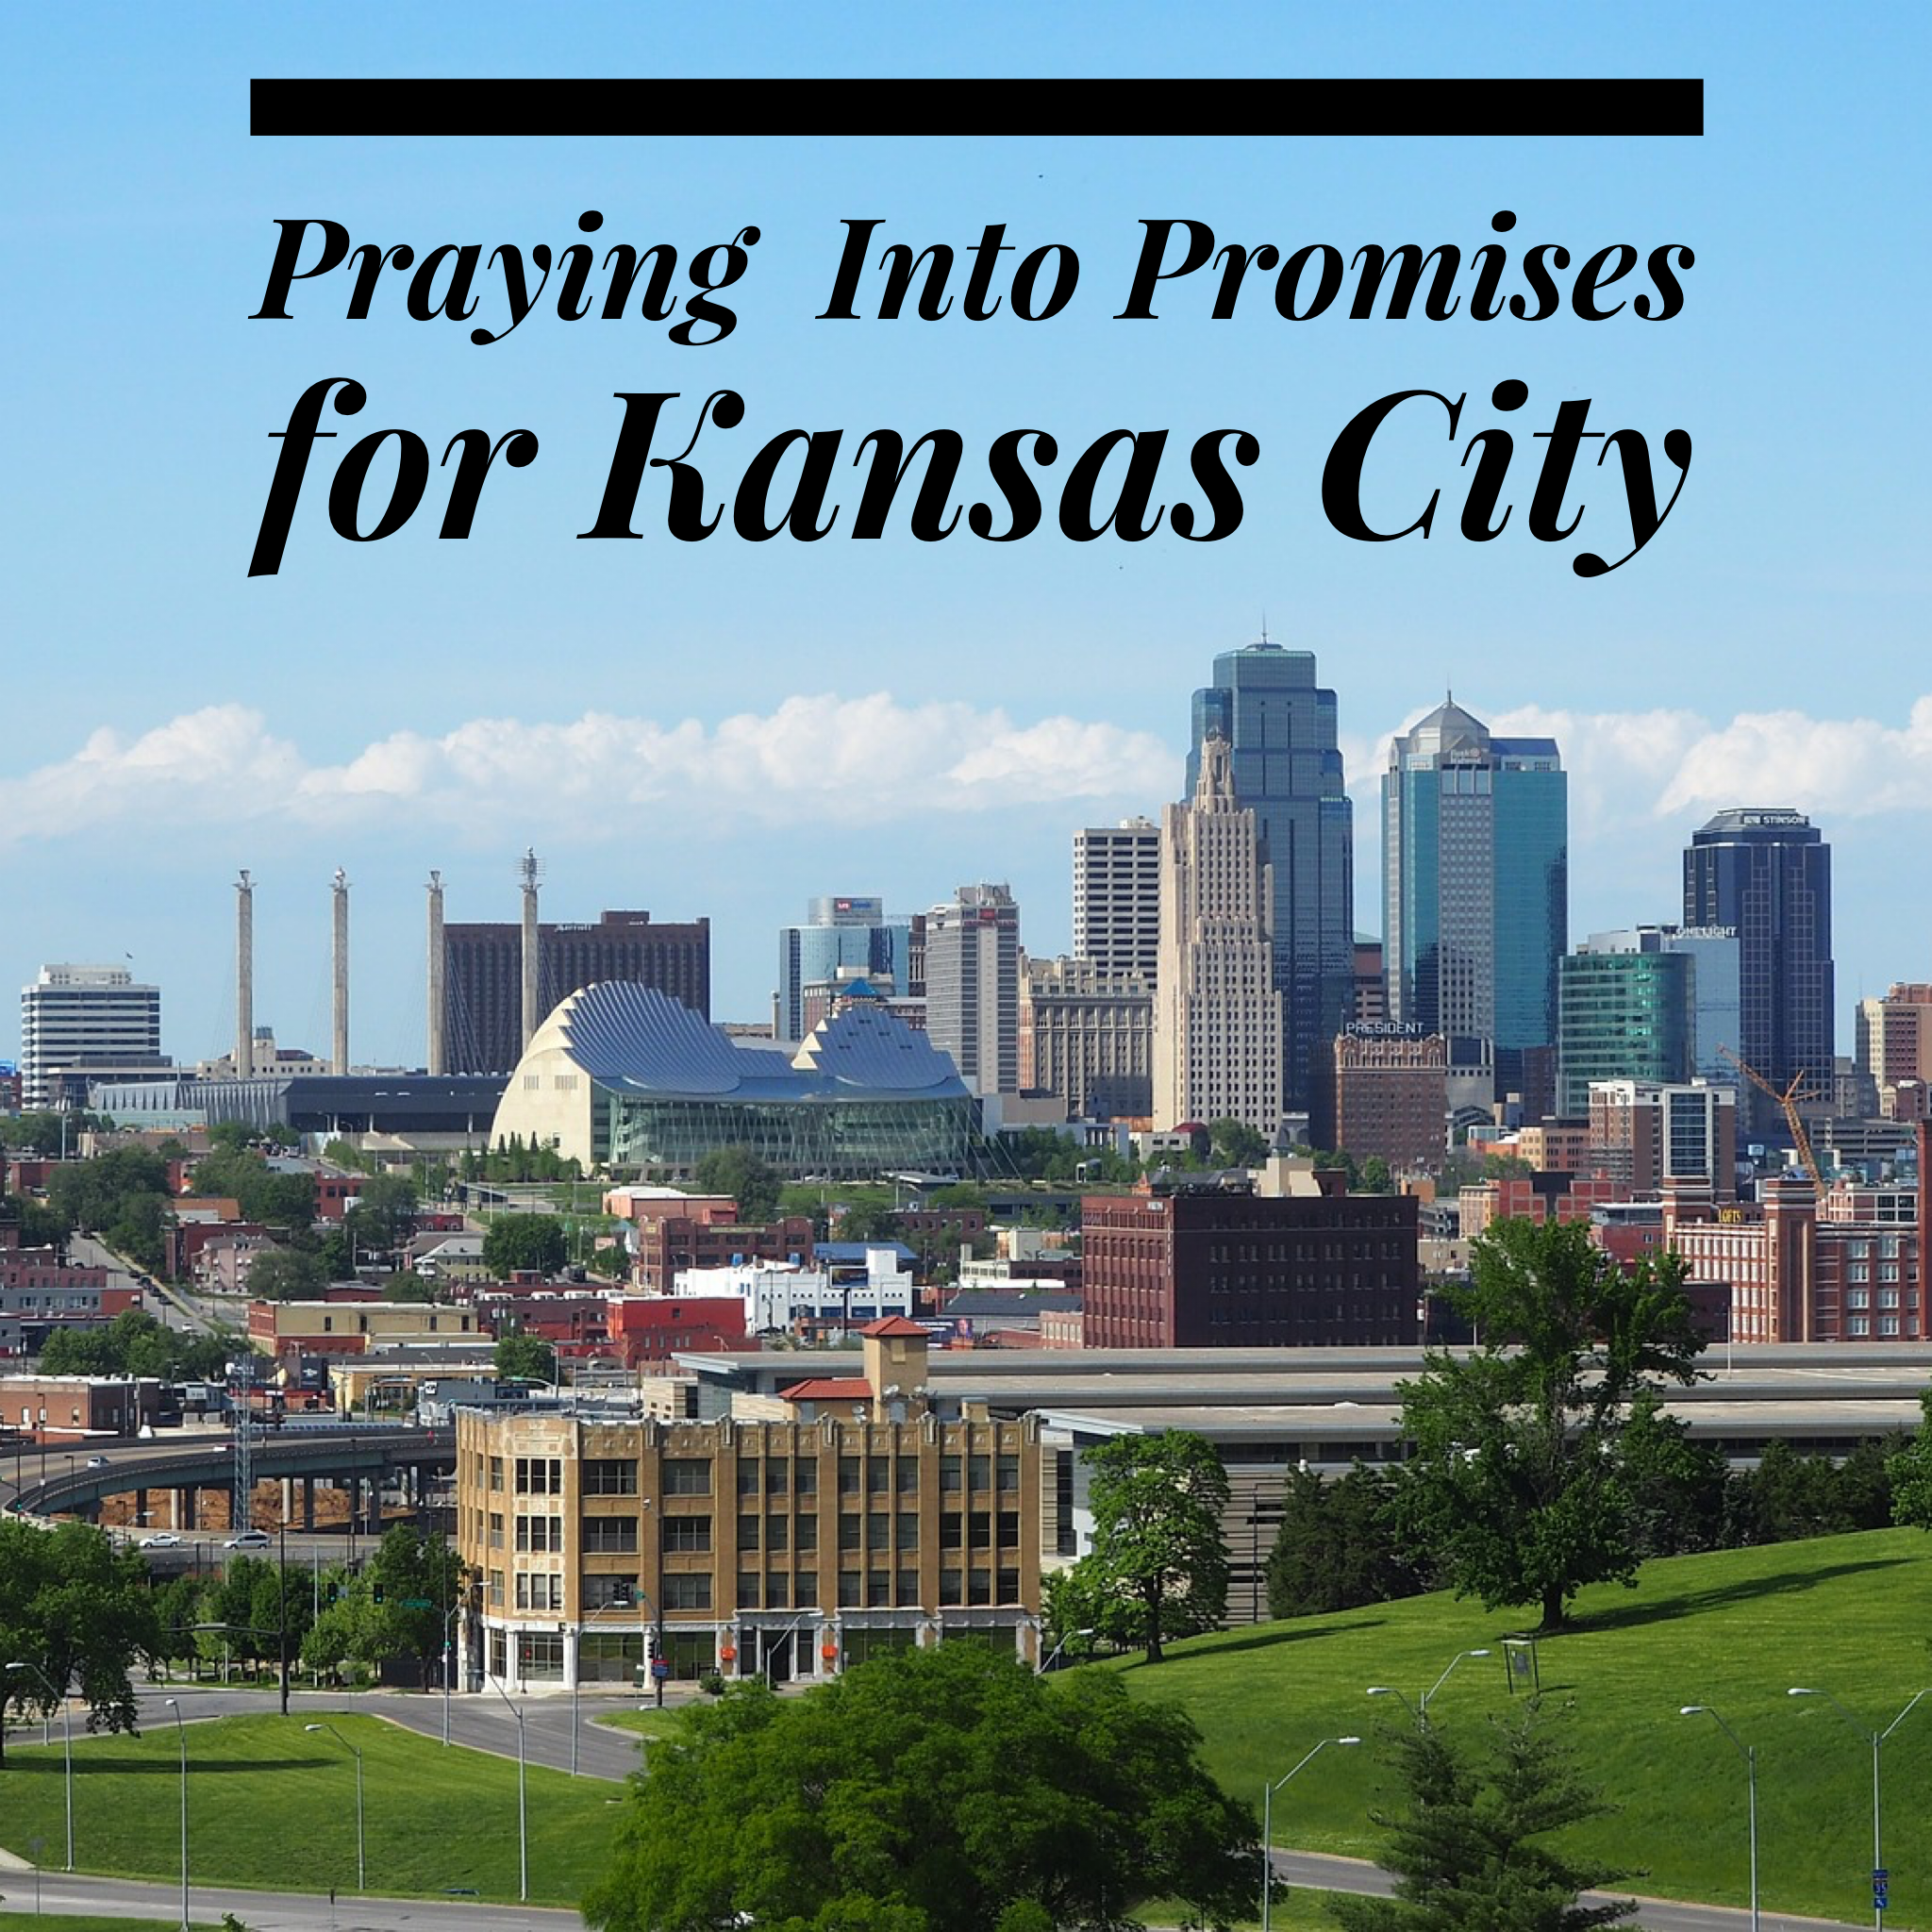 Praying Into Promises for Kansas City - 5/7/19